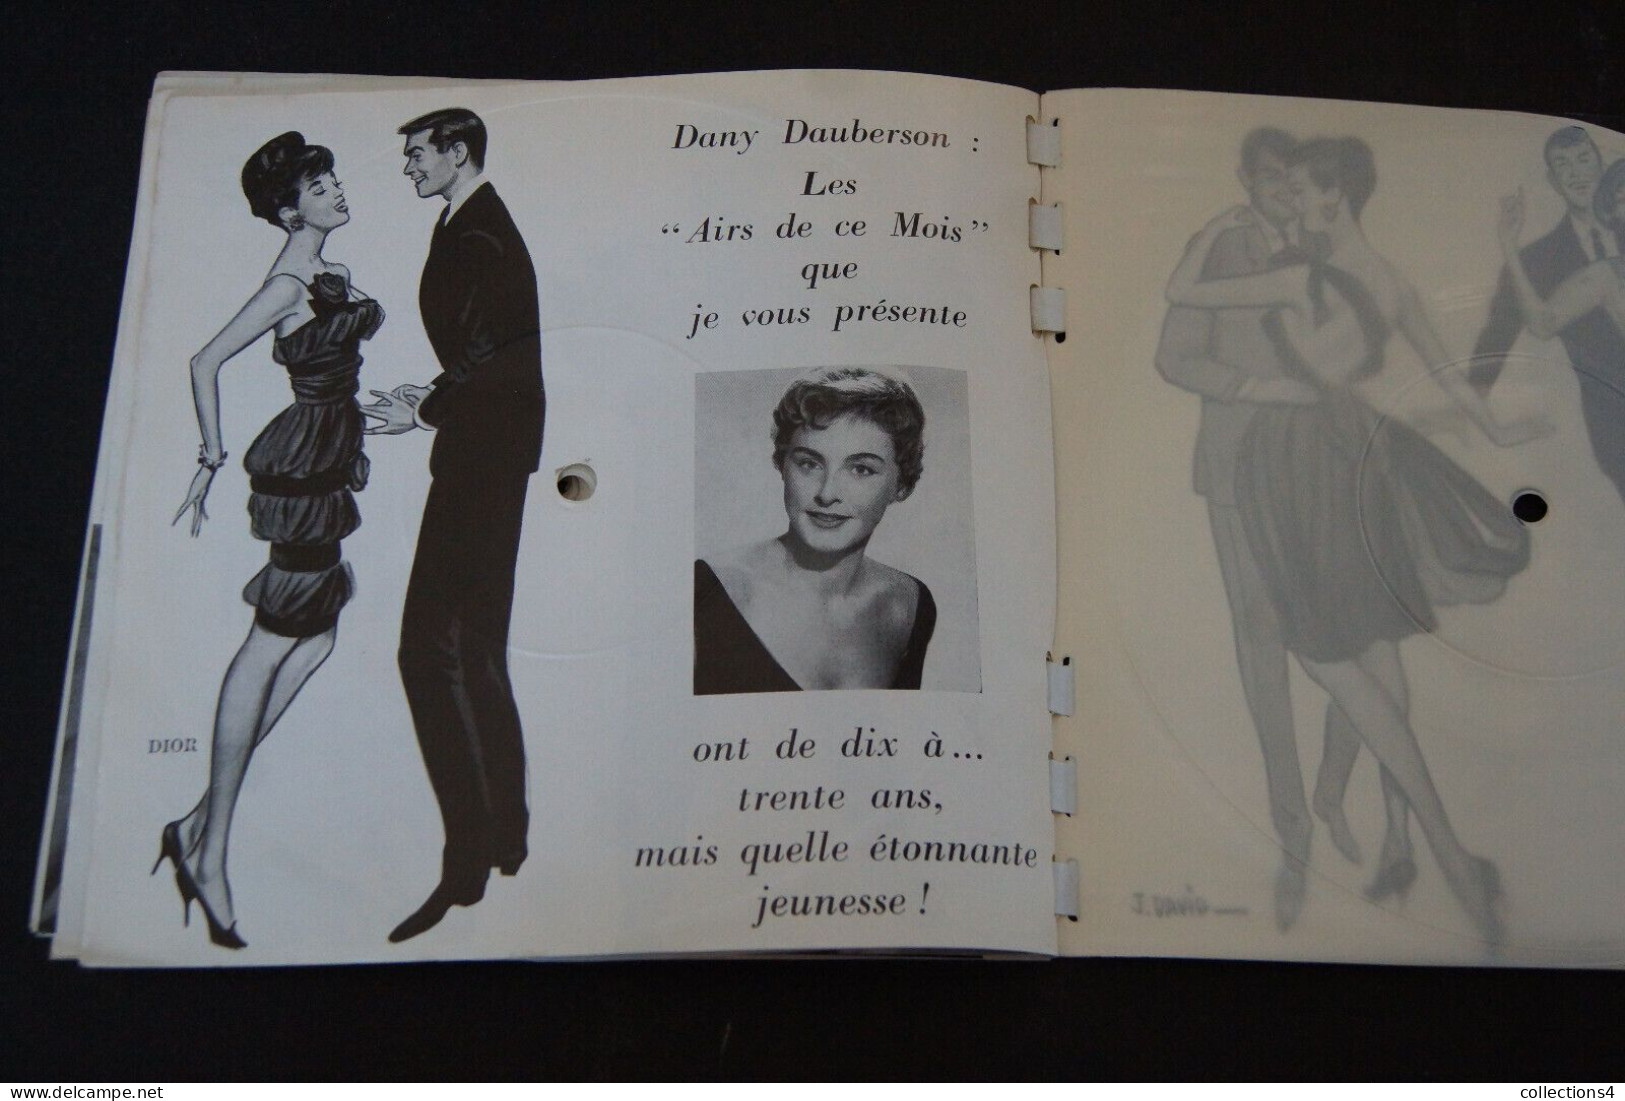 SONORAMA N° 13 NOV 1959 MARIE LAFORET FRANKIE AVALON SACHA DISTEL RITCHIE VALENS MARIO LANZA DE GAULLE ET +